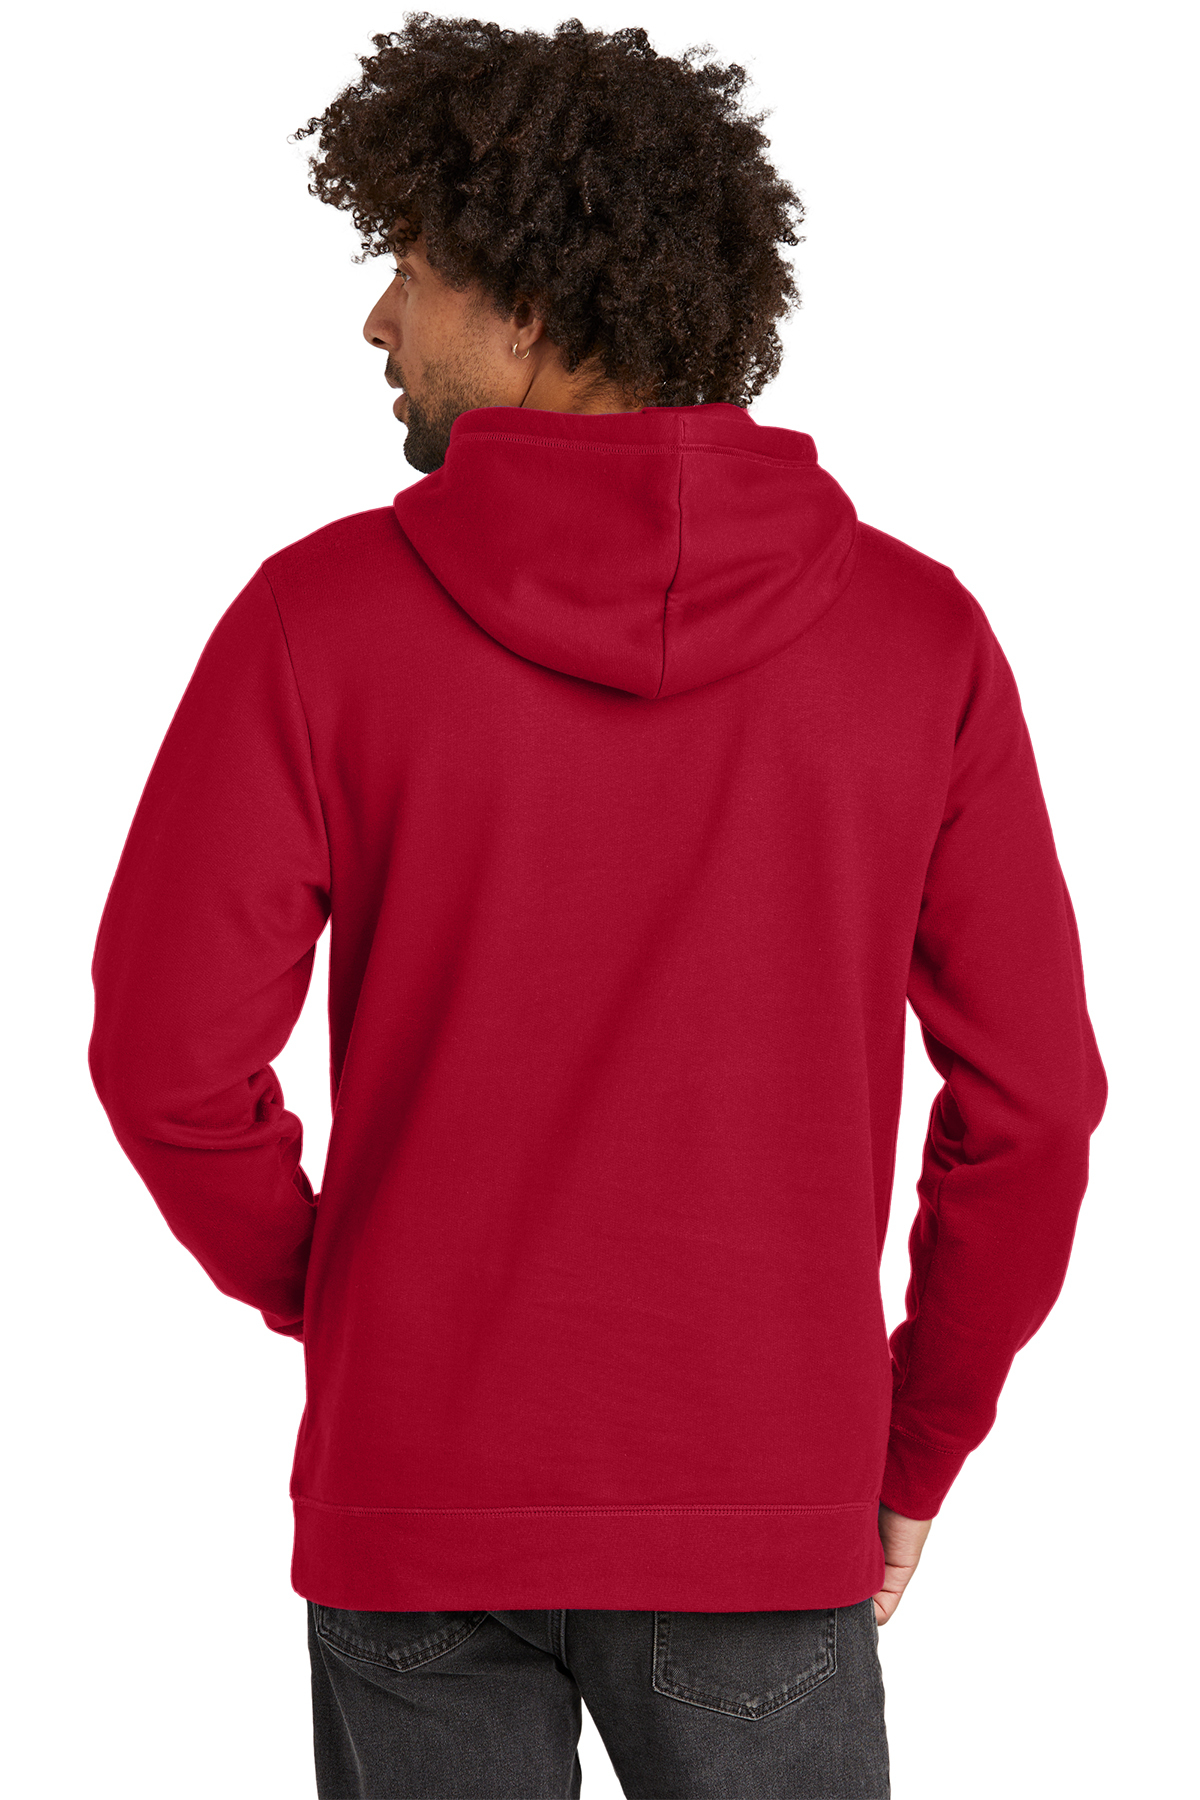 New Era Comeback Fleece Pullover Hoodie | Product | SanMar